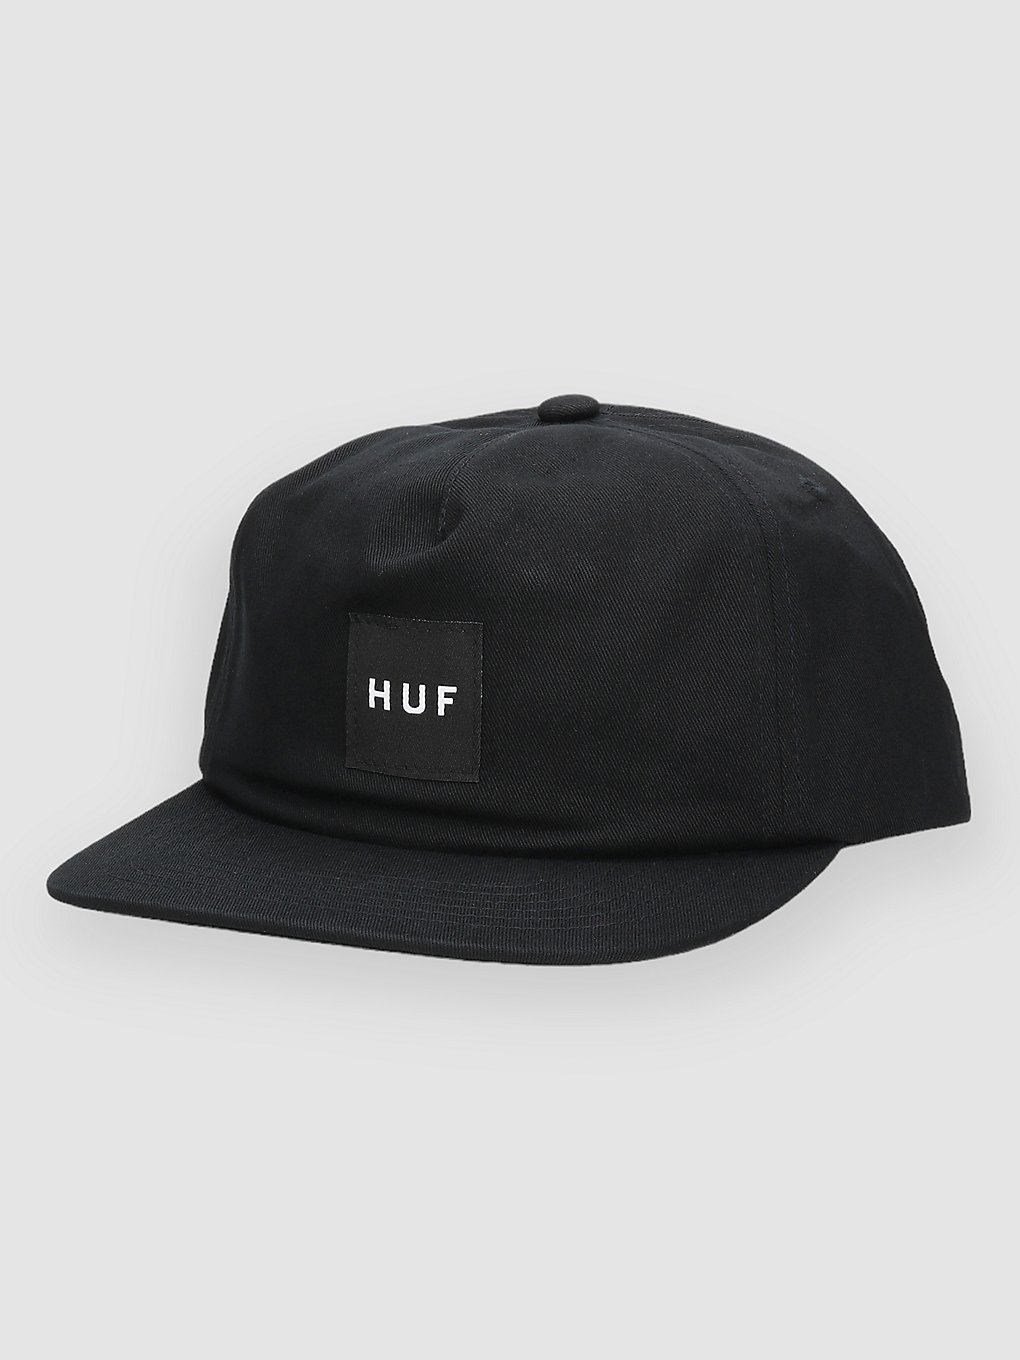 HUF Set Box Snapback Cap black kaufen